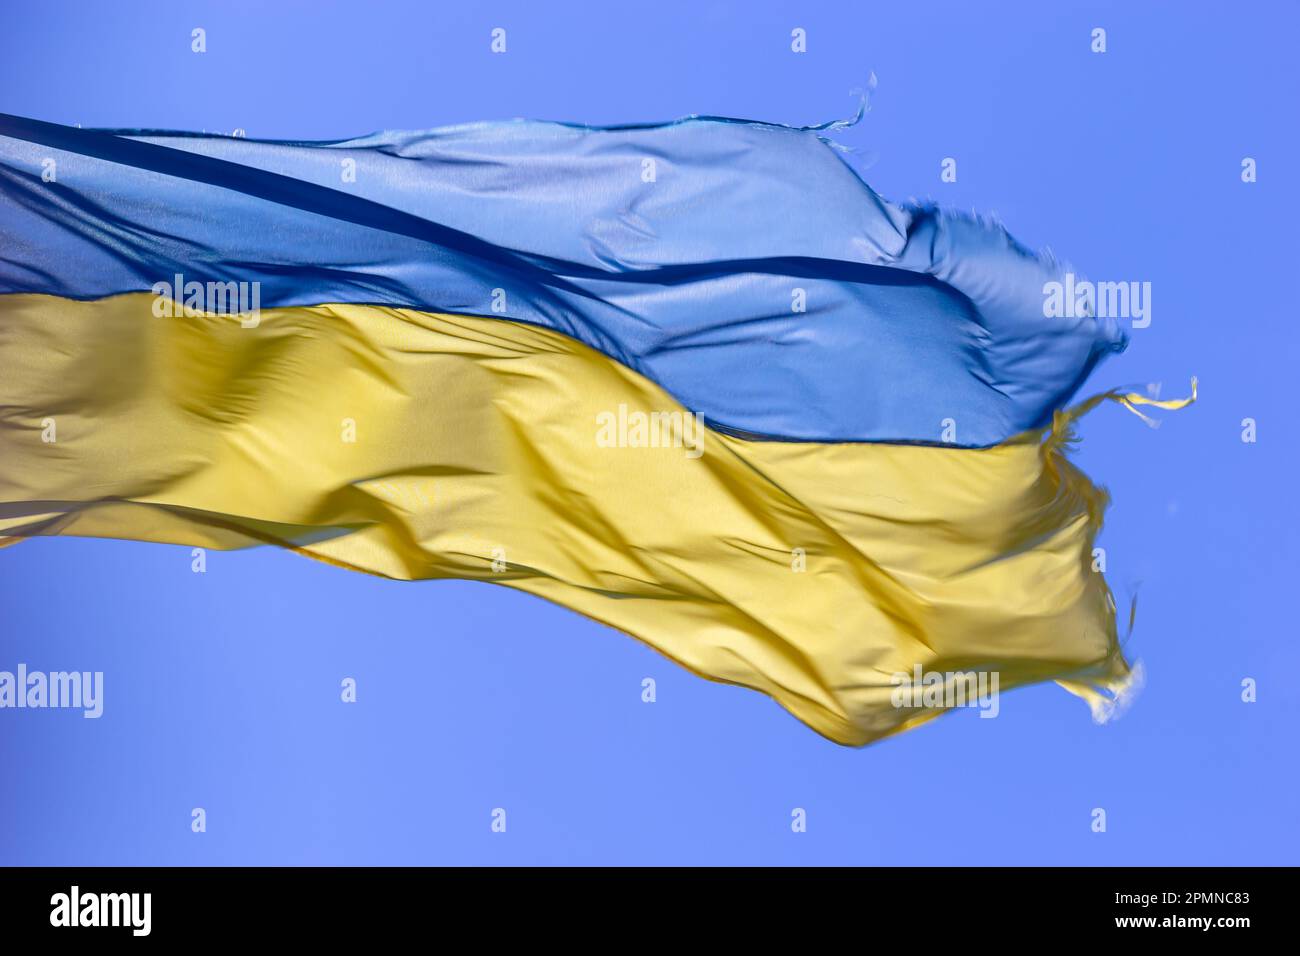 Ukraine flag isolated on the blue sky with clipping path. close up waving flag of Ukraine. flag symbols of Ukraine. Stock Photo